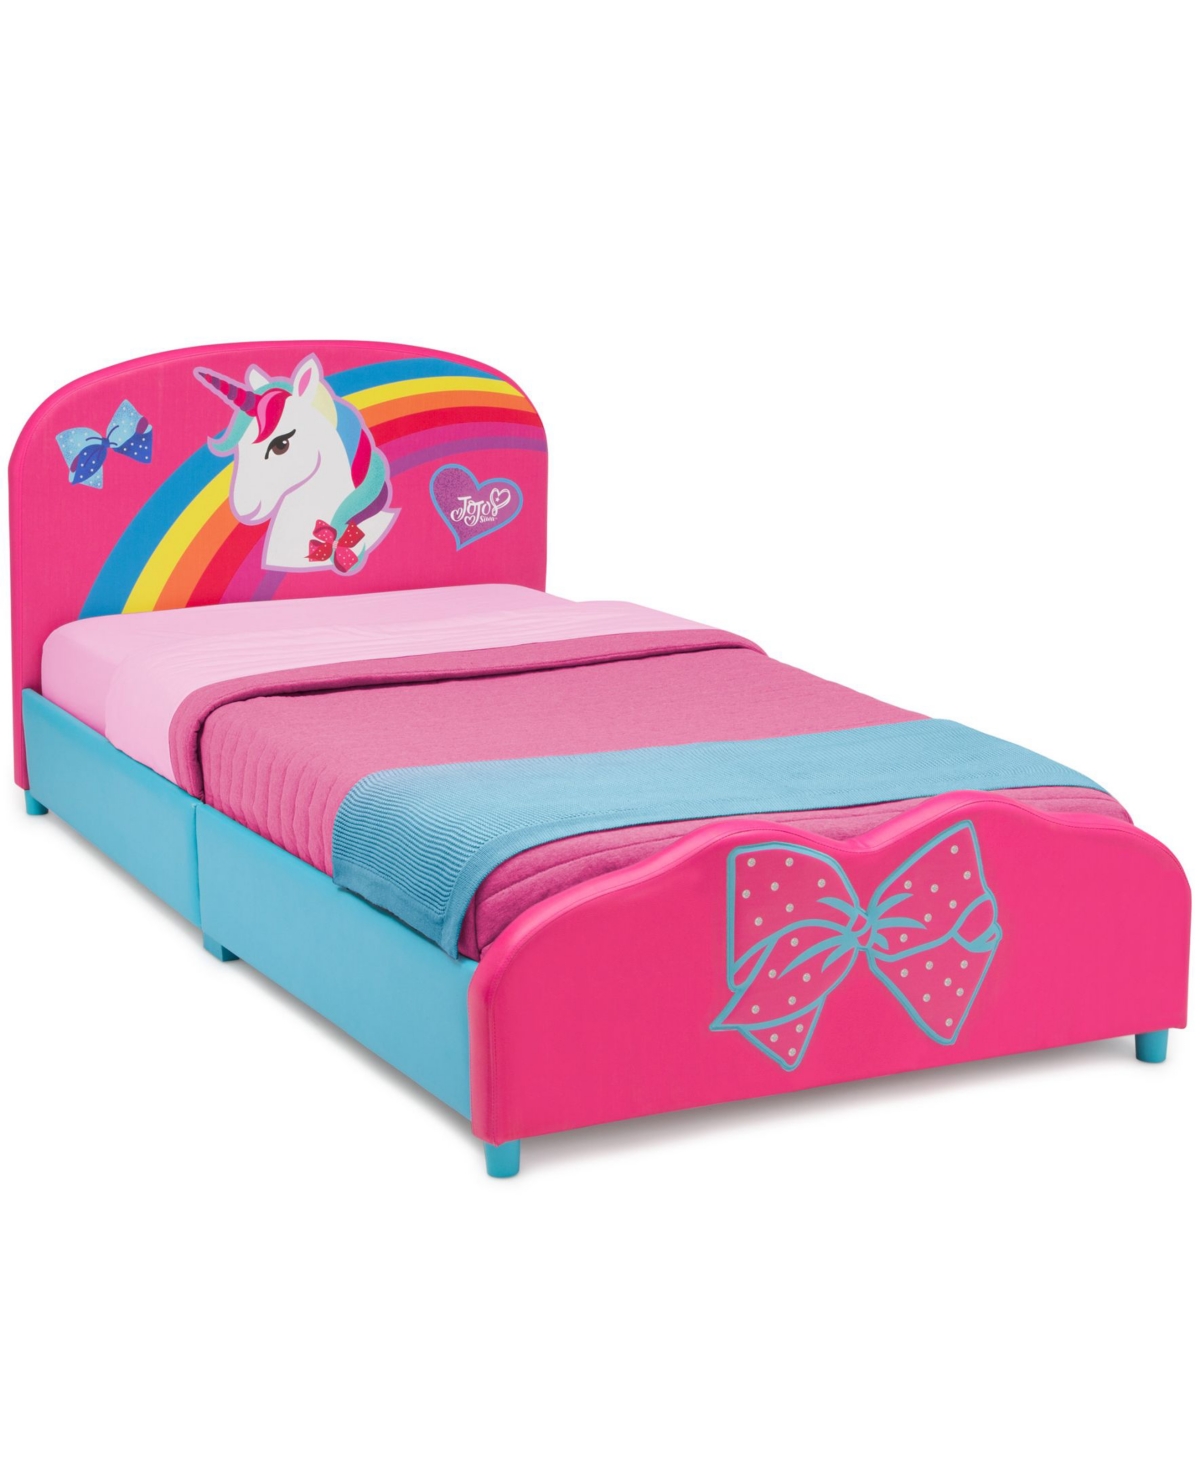 Jojo Siwa Upholstered Twin Bed by Delta Children